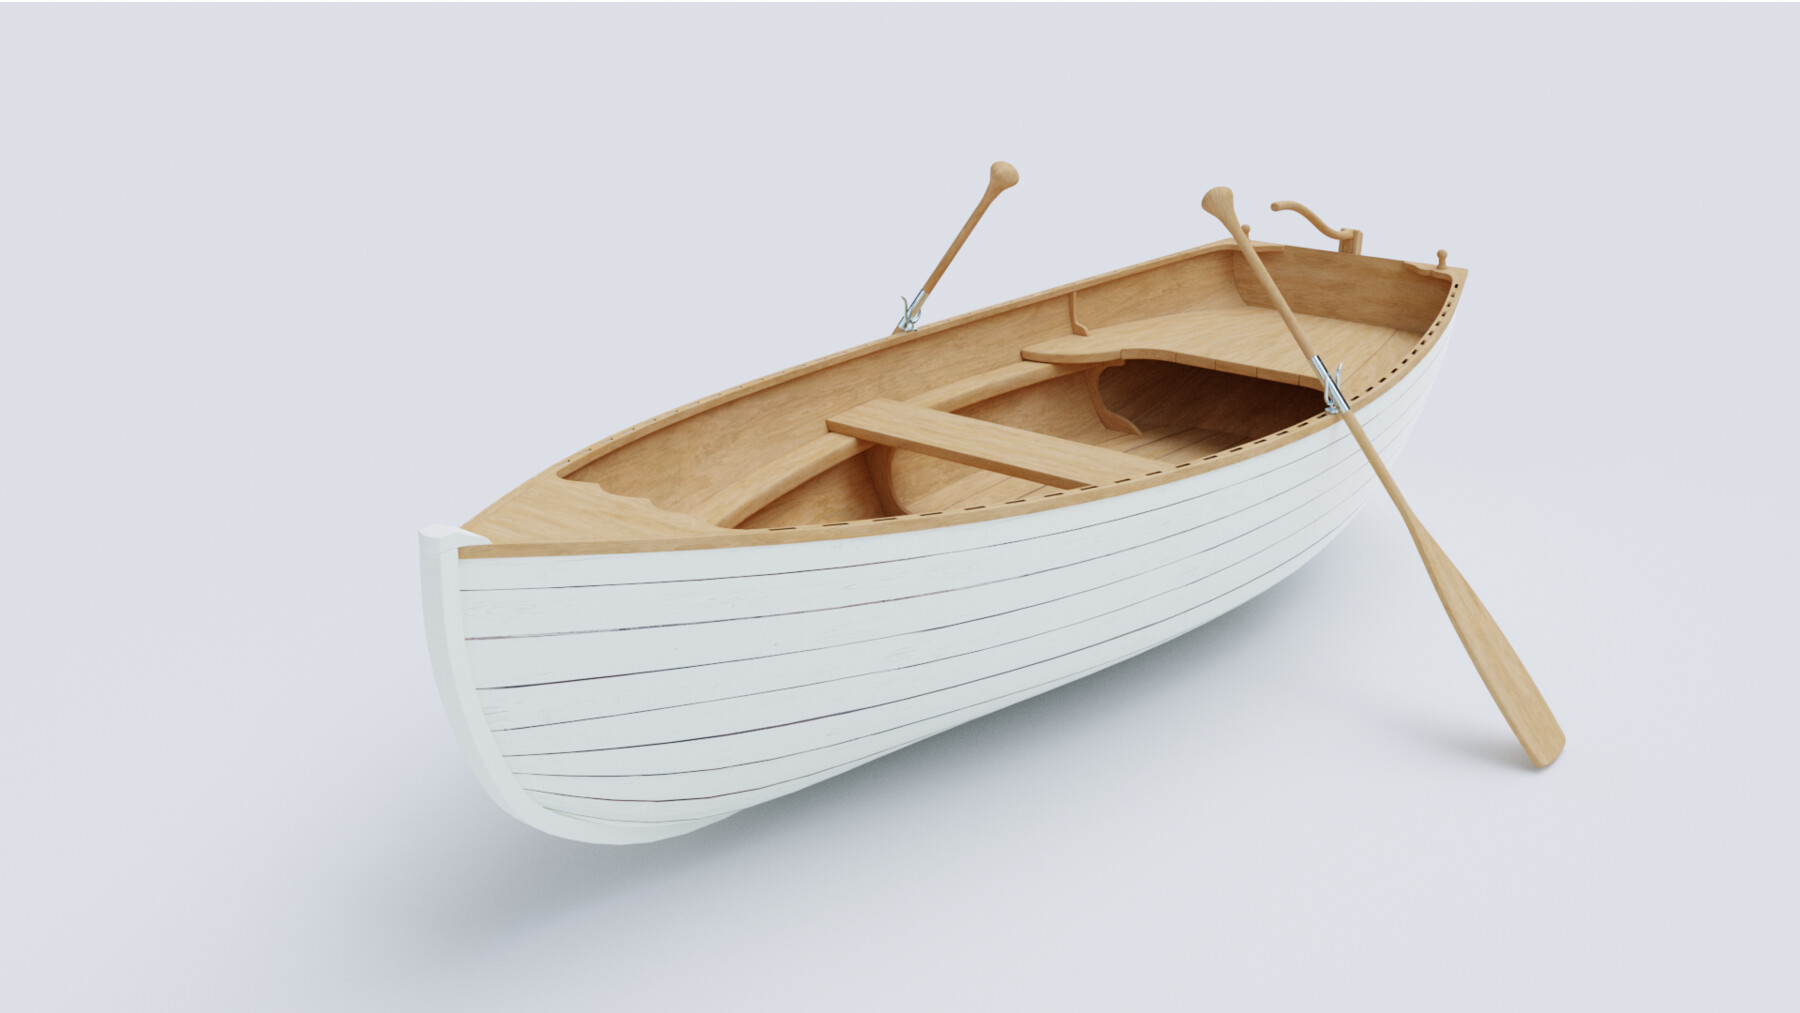 Wooden Boat 3d Model